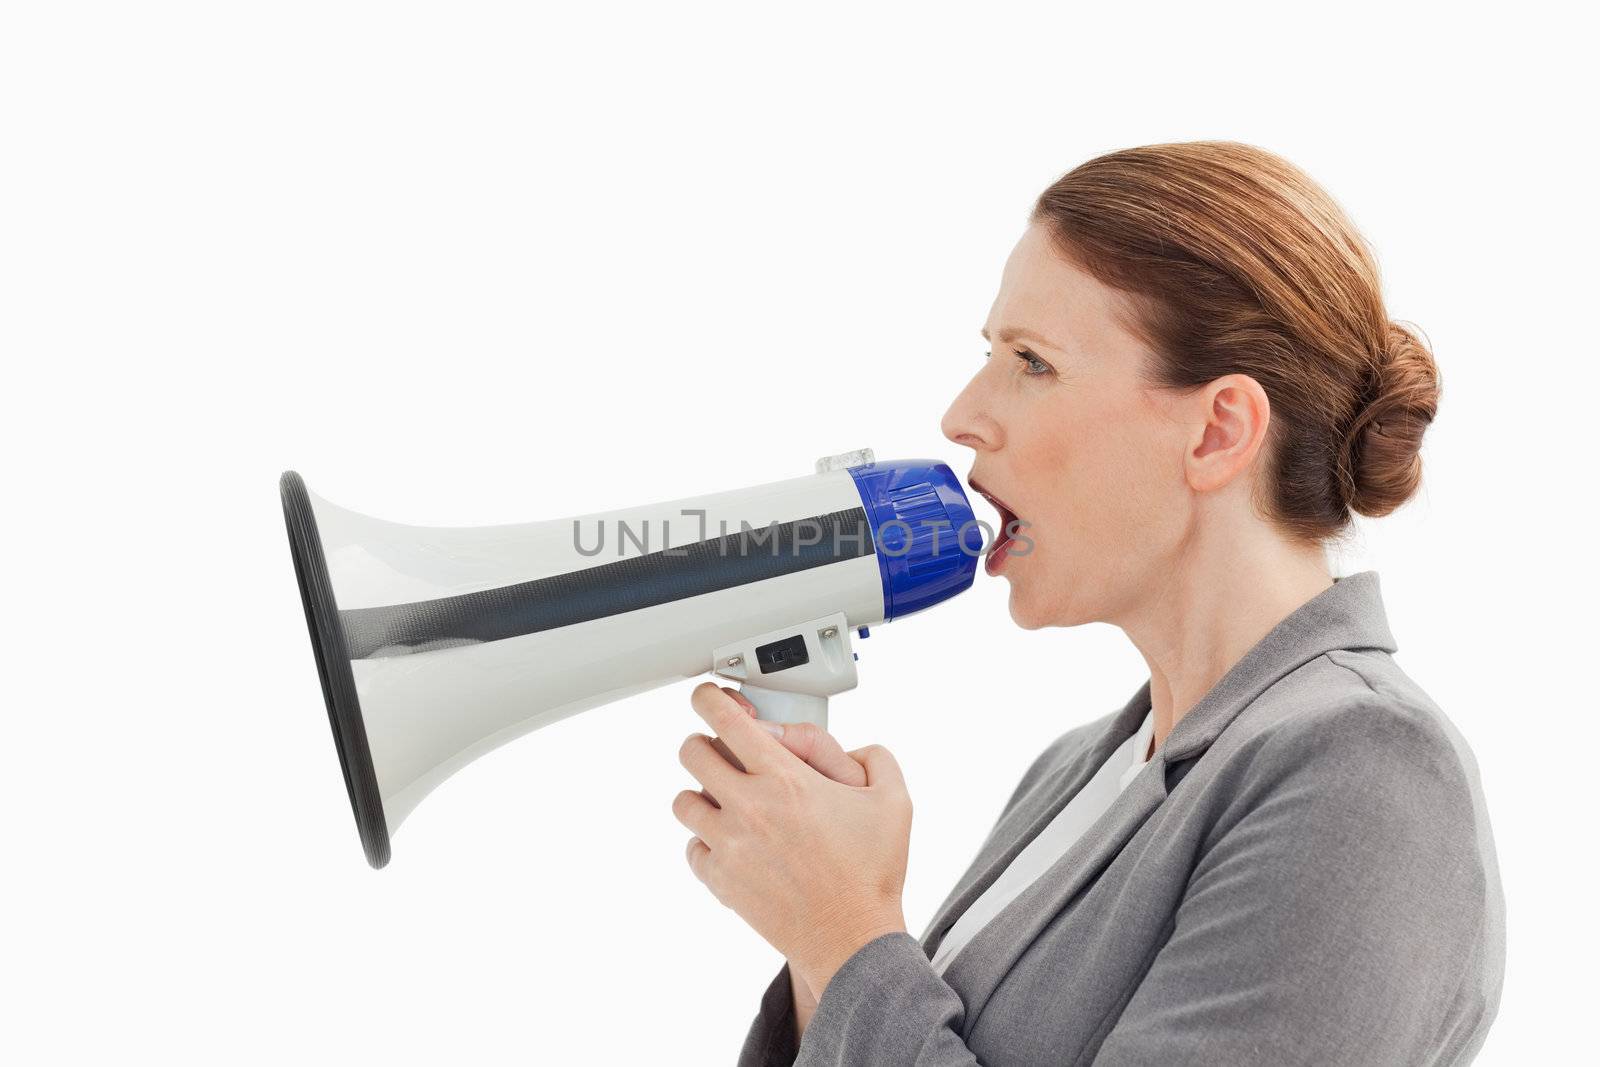 Businesswoman talking into megaphone by Wavebreakmedia